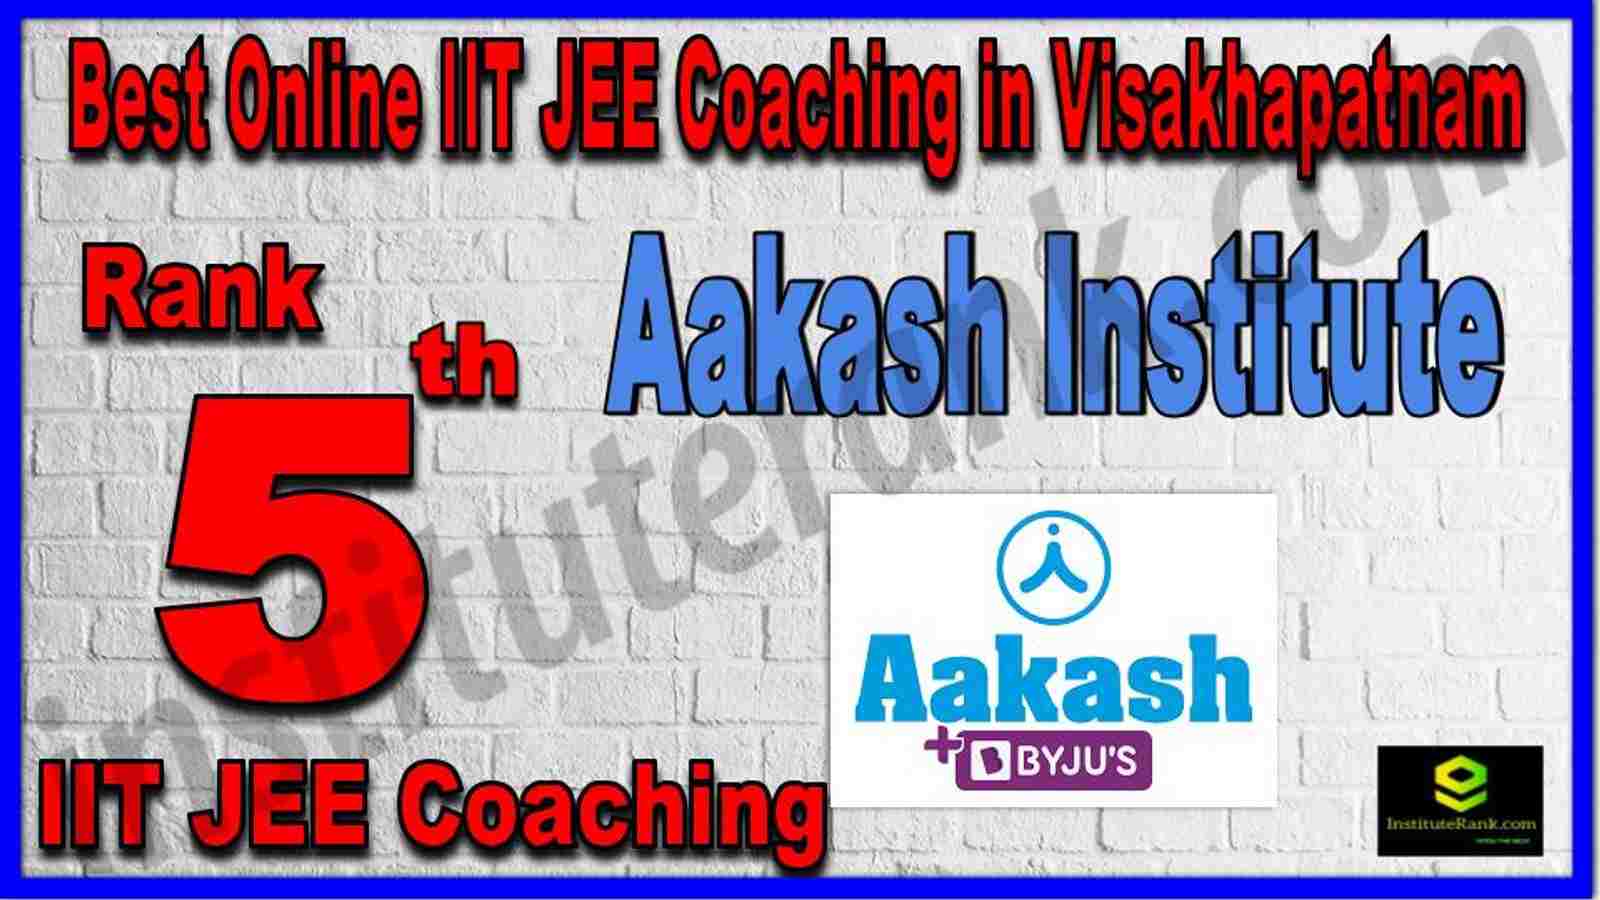 Rank 5th Best Online IIT JEE Coaching in Visakhapatnam